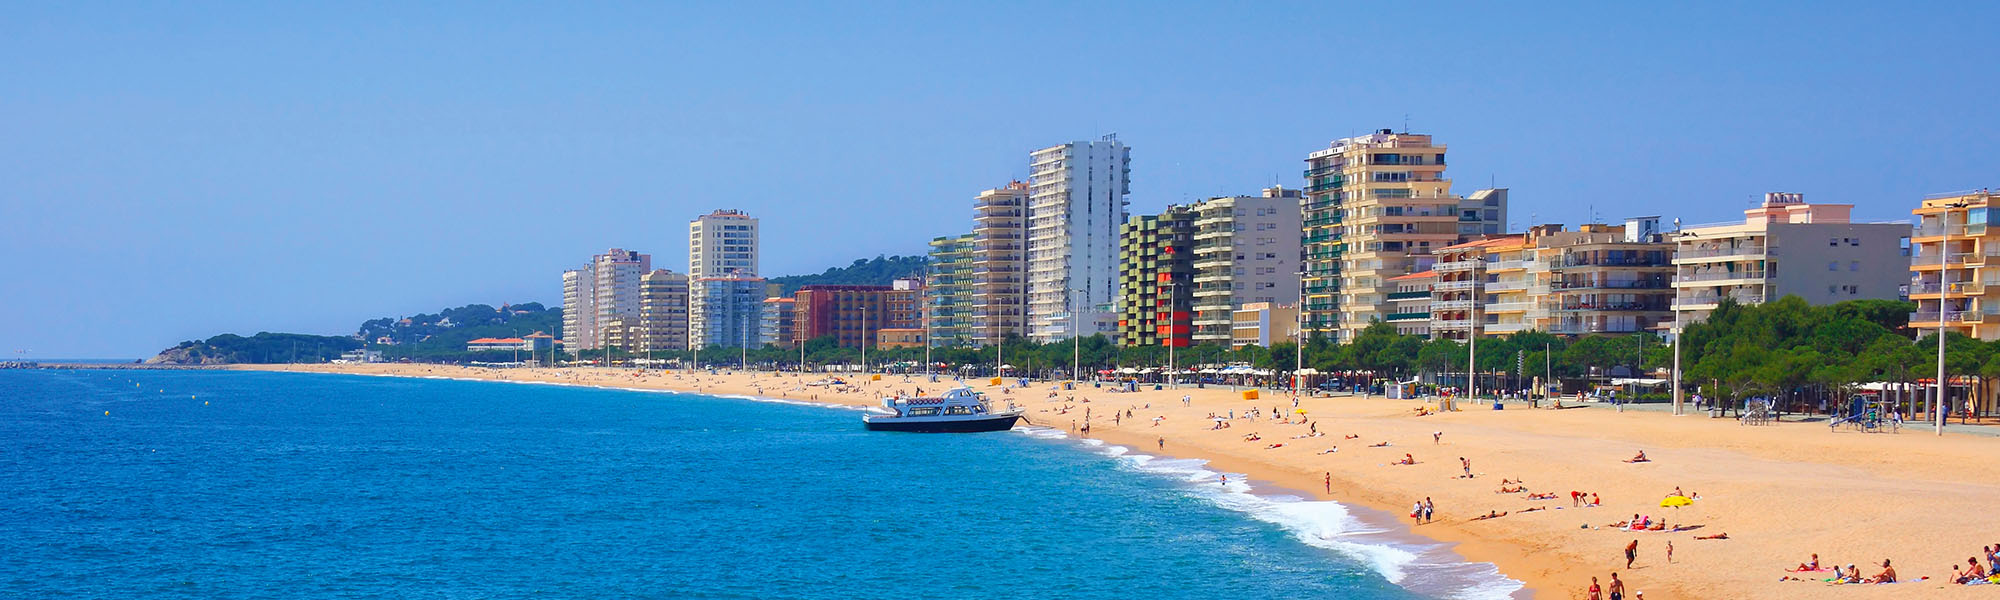 tourhub | Just Go Holidays | Spain’s Costa Brava Inclusive 